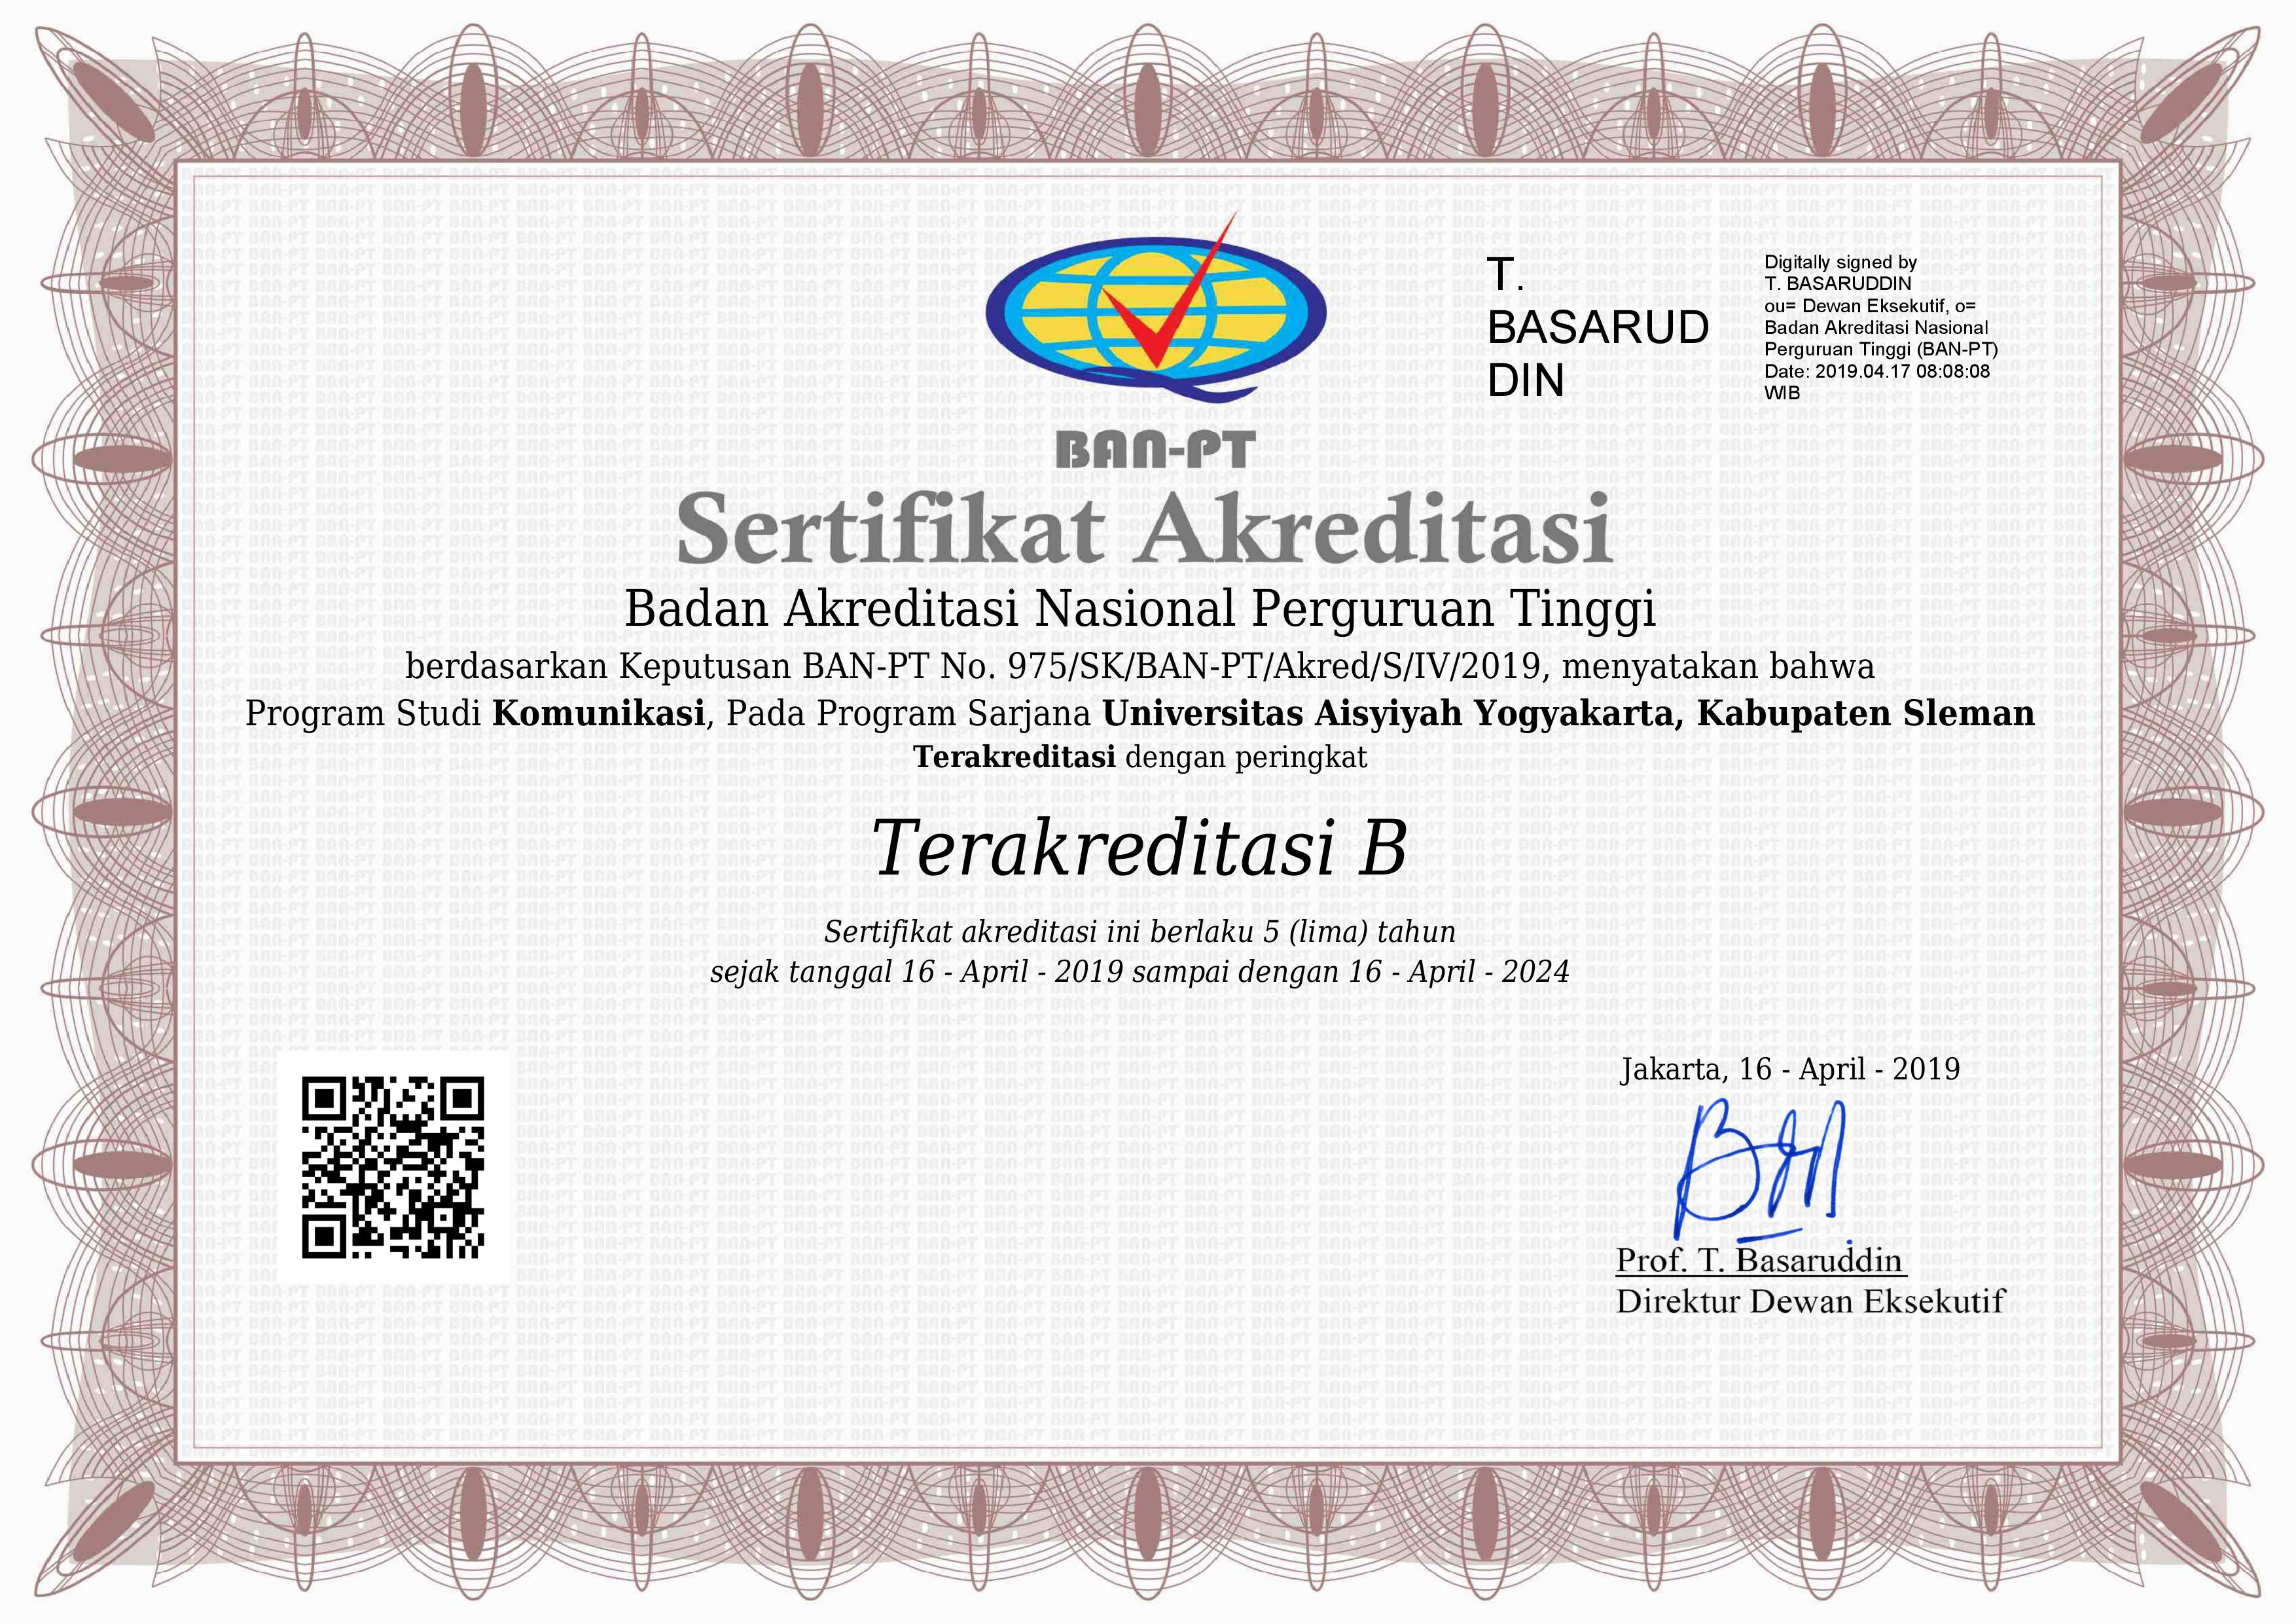 Akreditasi B Prodi Komunikasi UNISA Yogyakarta